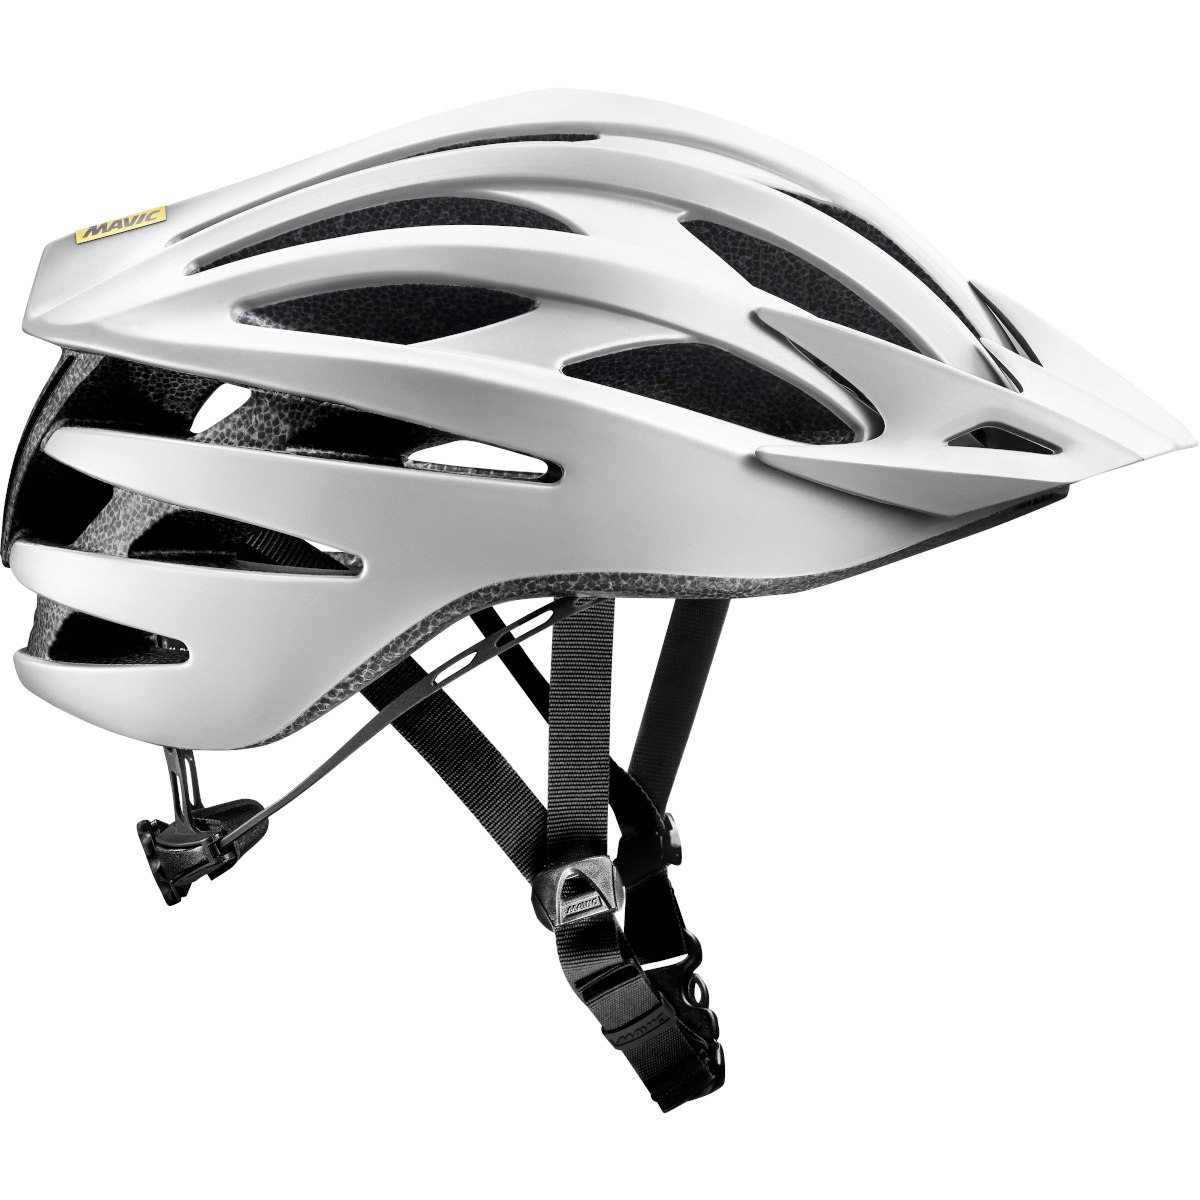 Image of Mavic Crossride SL Elite Helmet - white/black